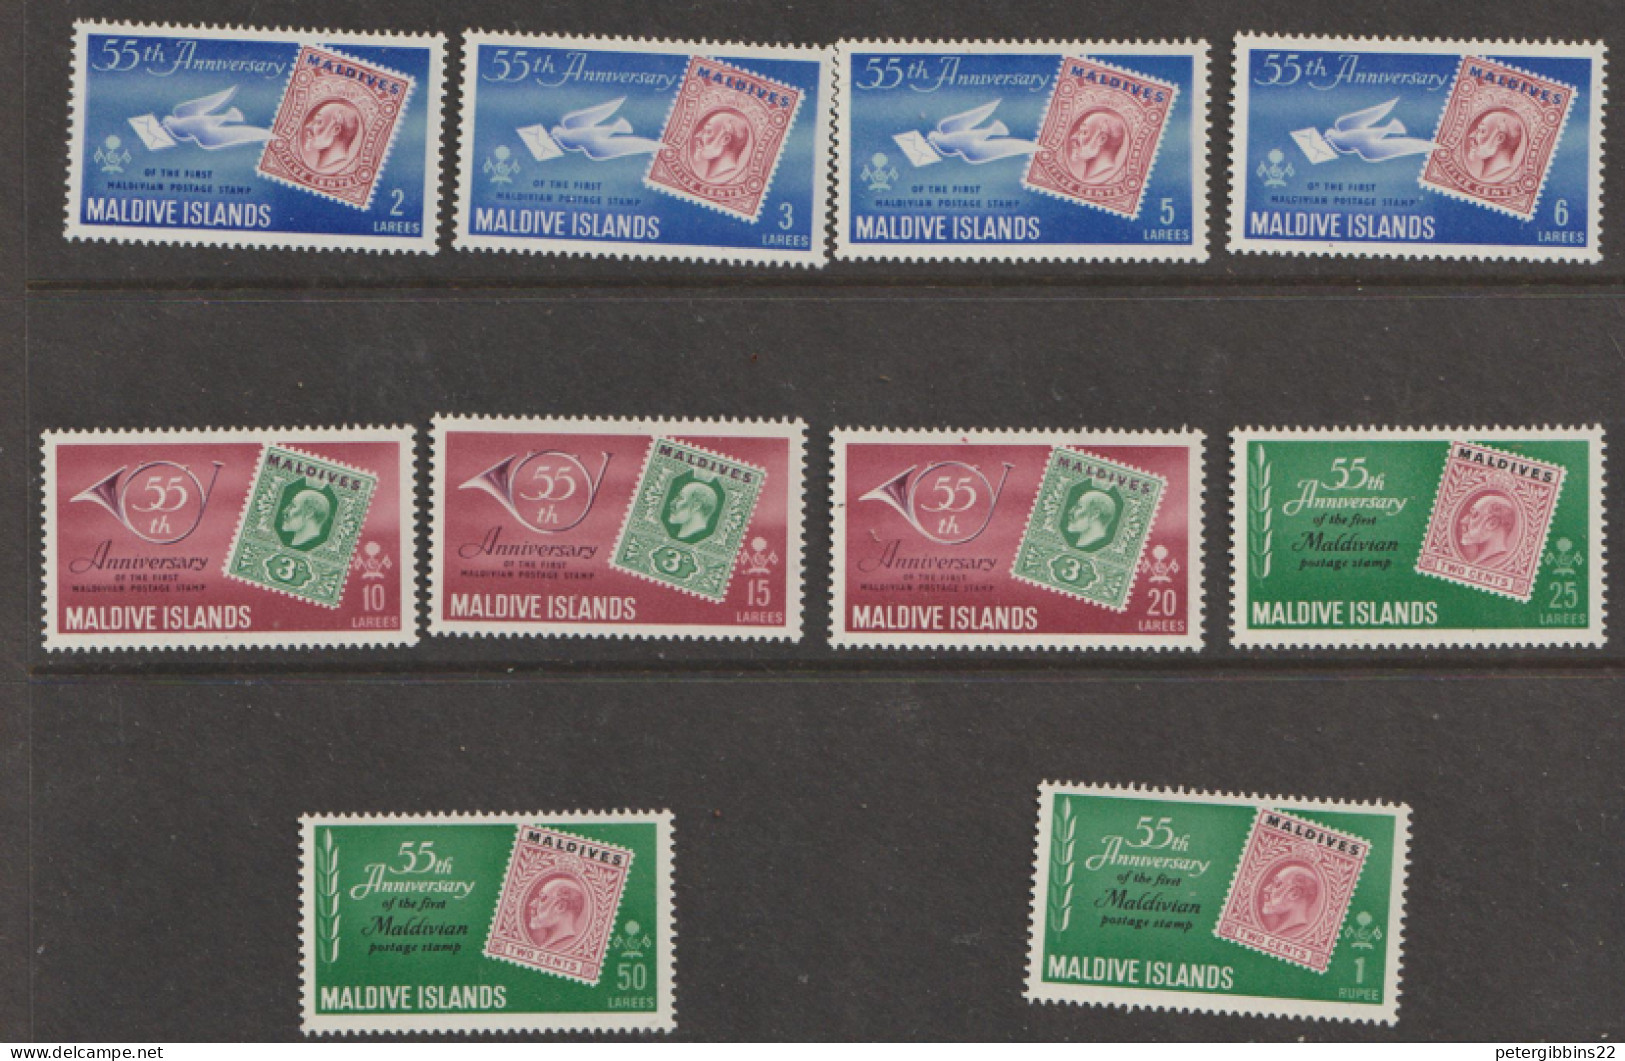 Maldives  1961  SG  78-9  Anniversary Maldivian Postage Stamp   Lightly Mounted Mint - Maldives (...-1965)